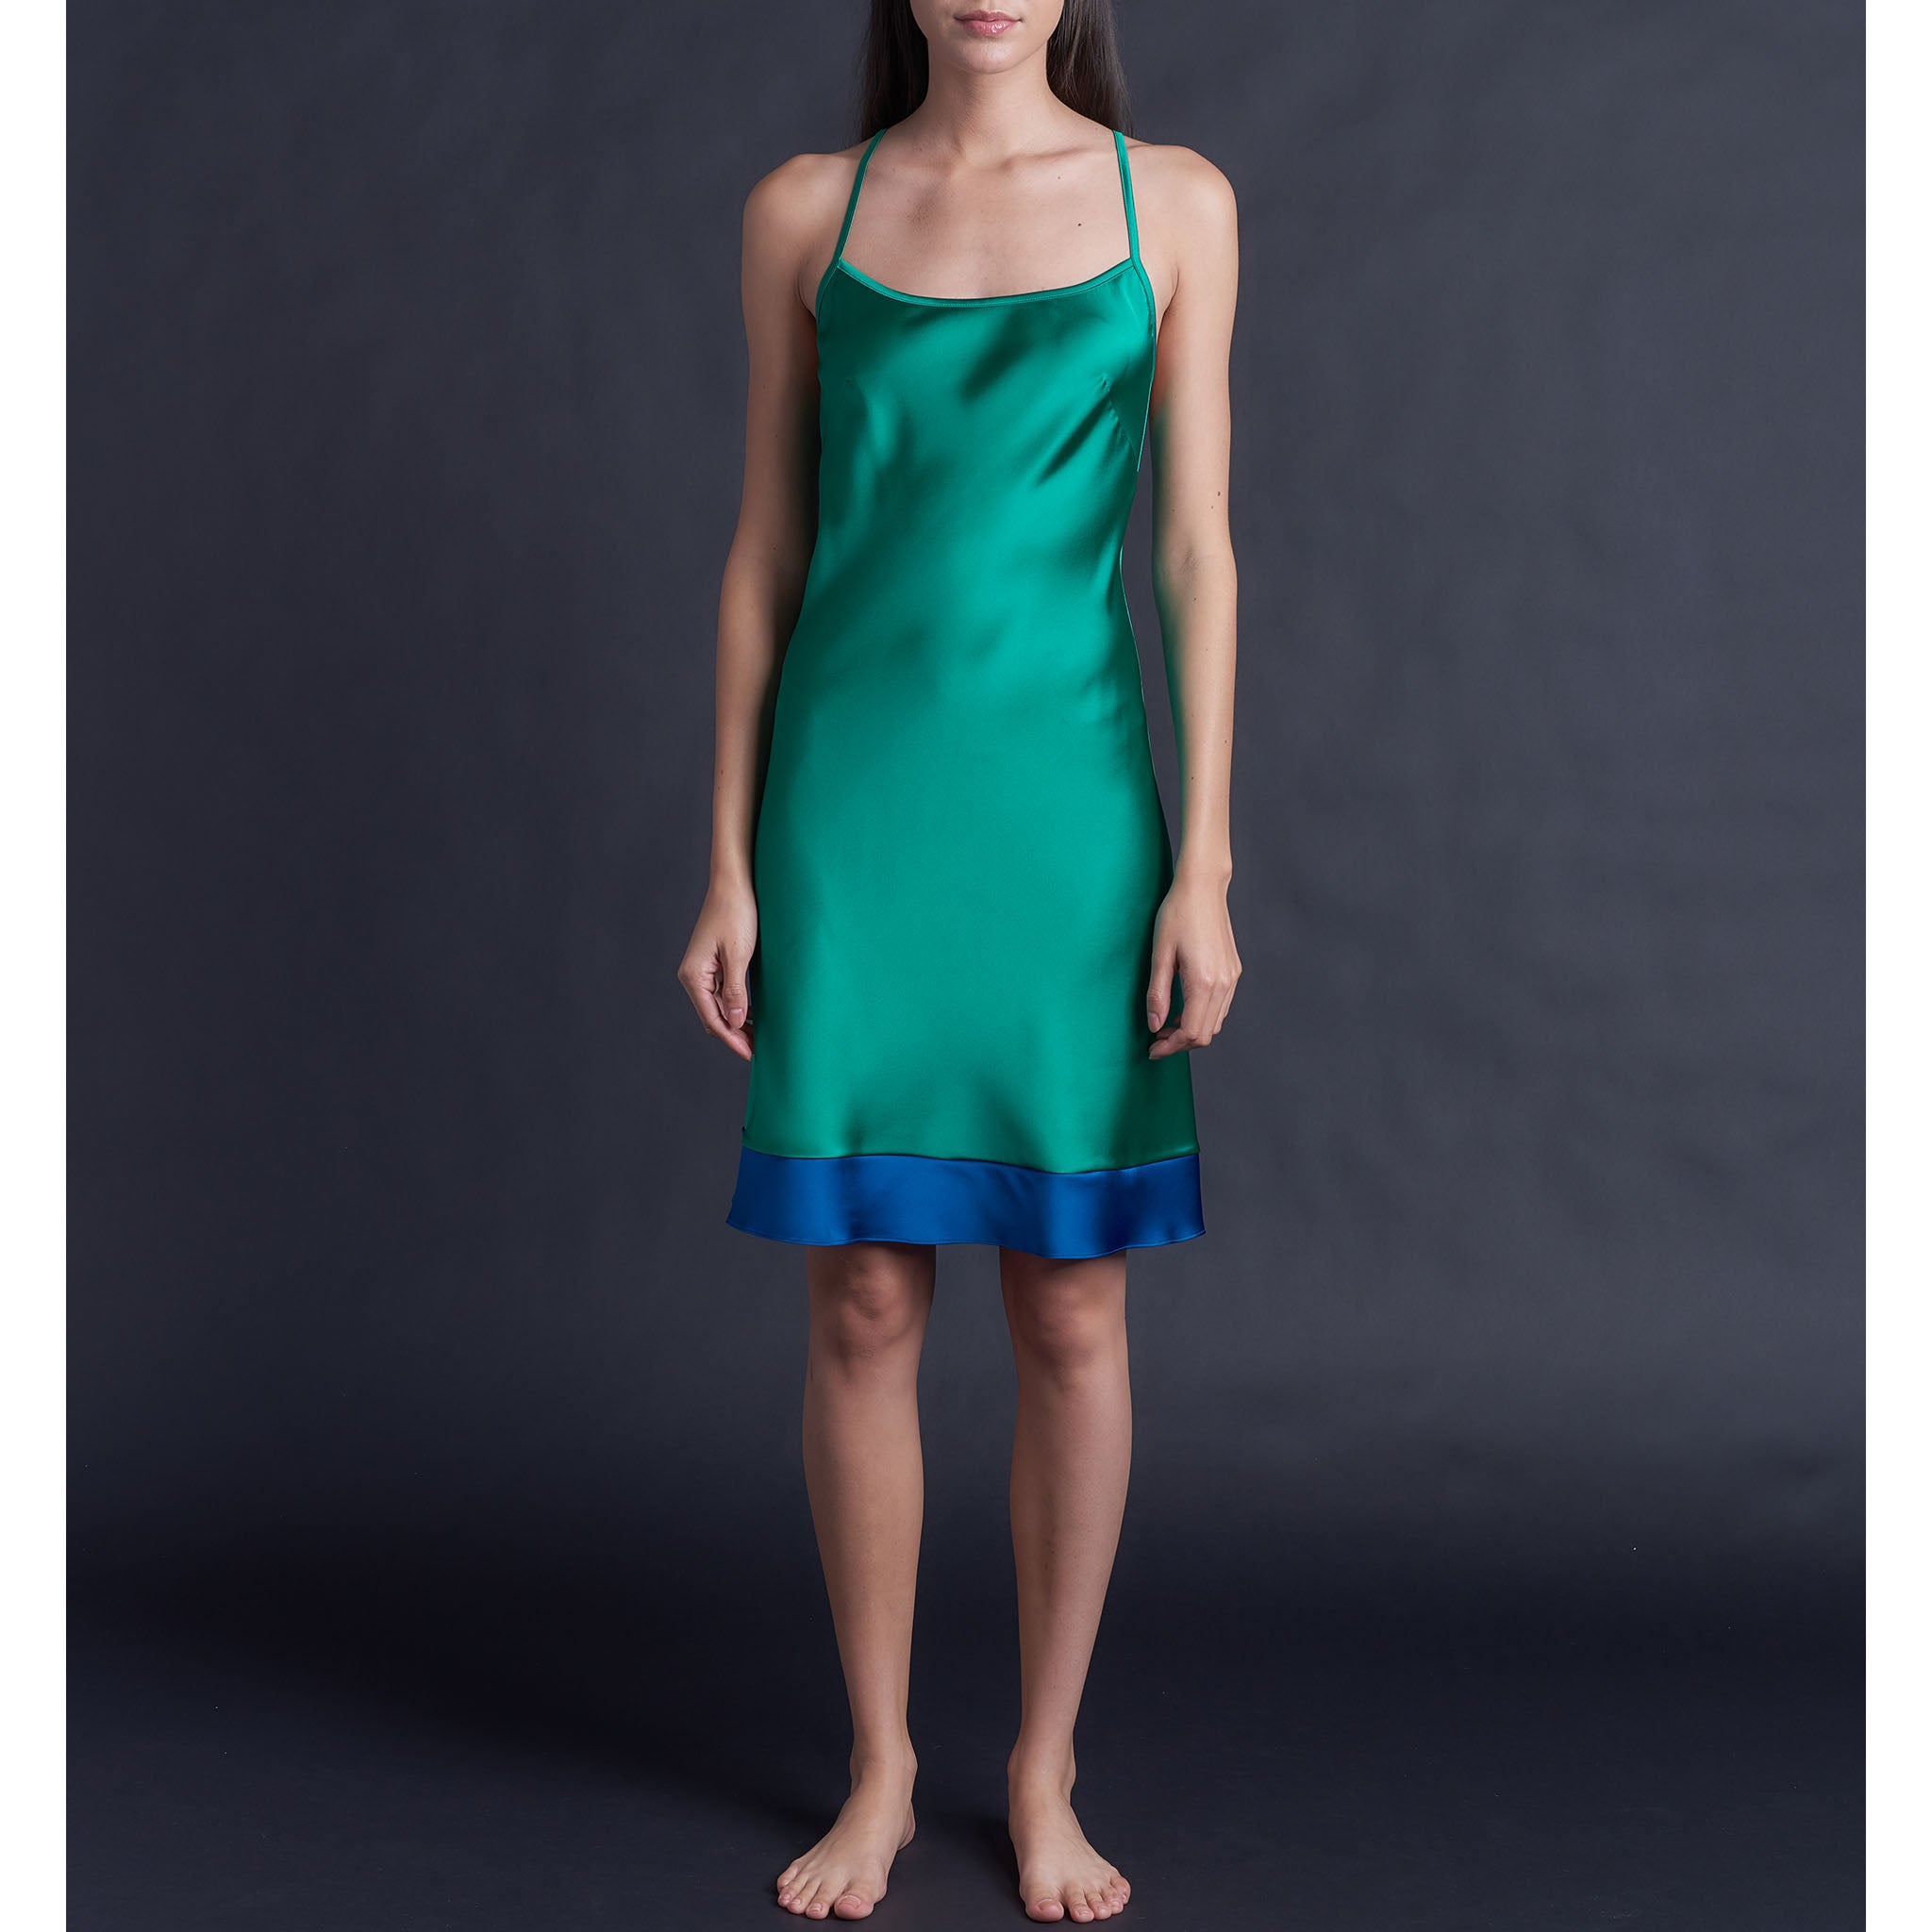 Athena Mid Length Slip Dress in Color Block Emerald & Tanzanite Silk Charmeuse